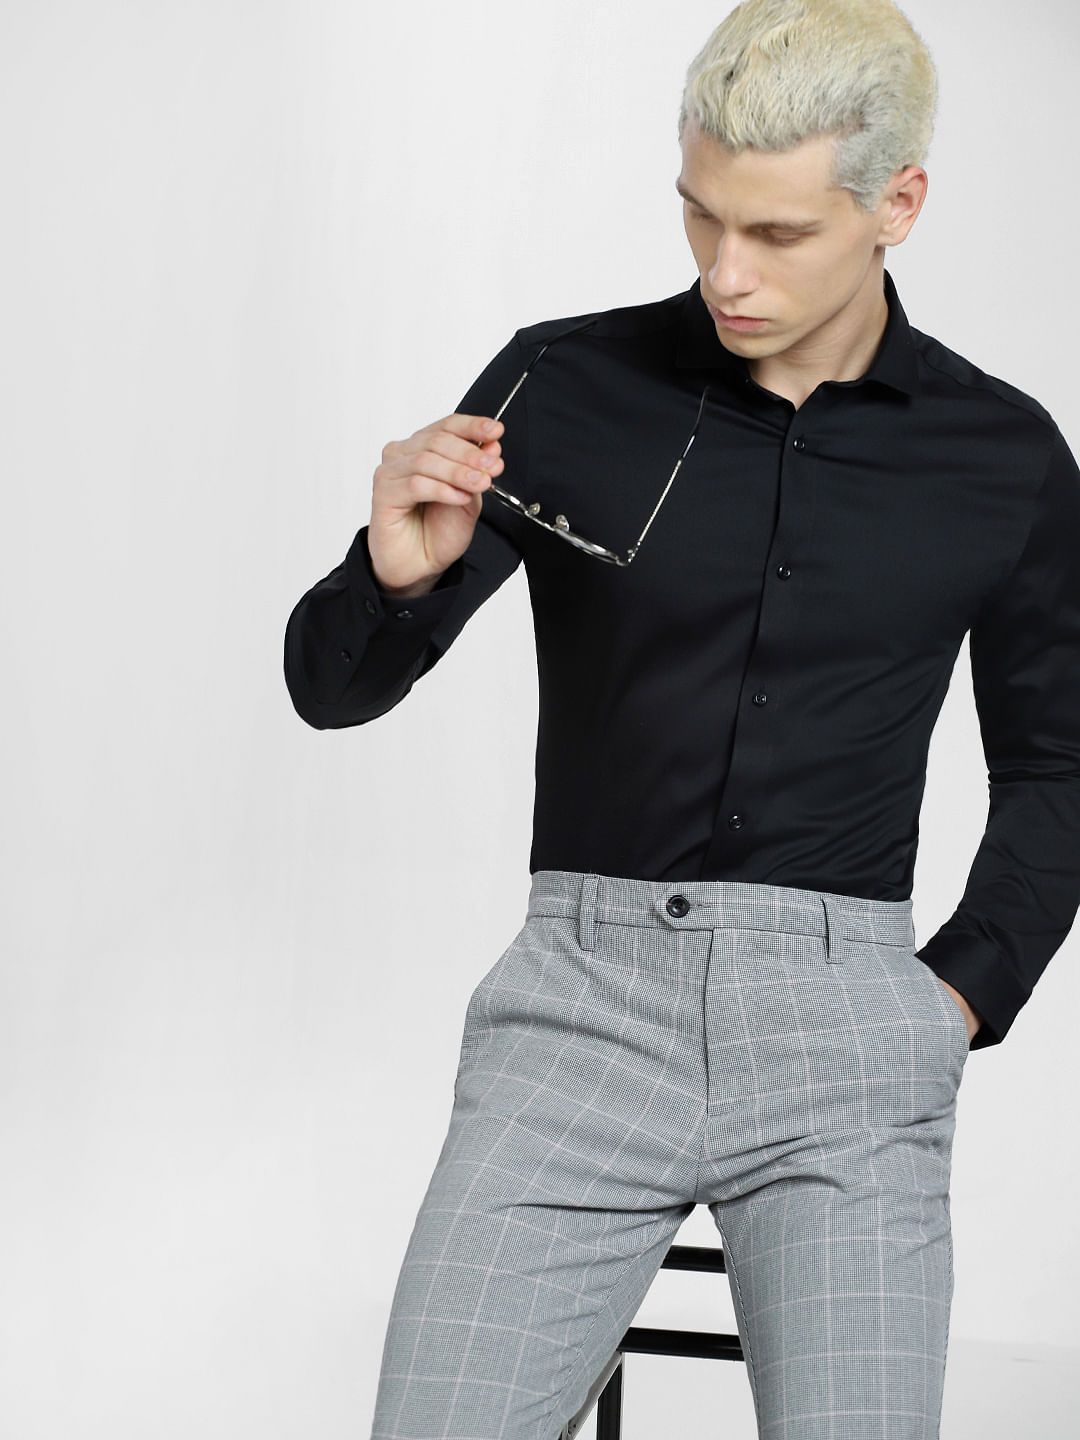 Best Black Shirts Combination Ideas  Black Shirt Matching Pants   TiptopGents